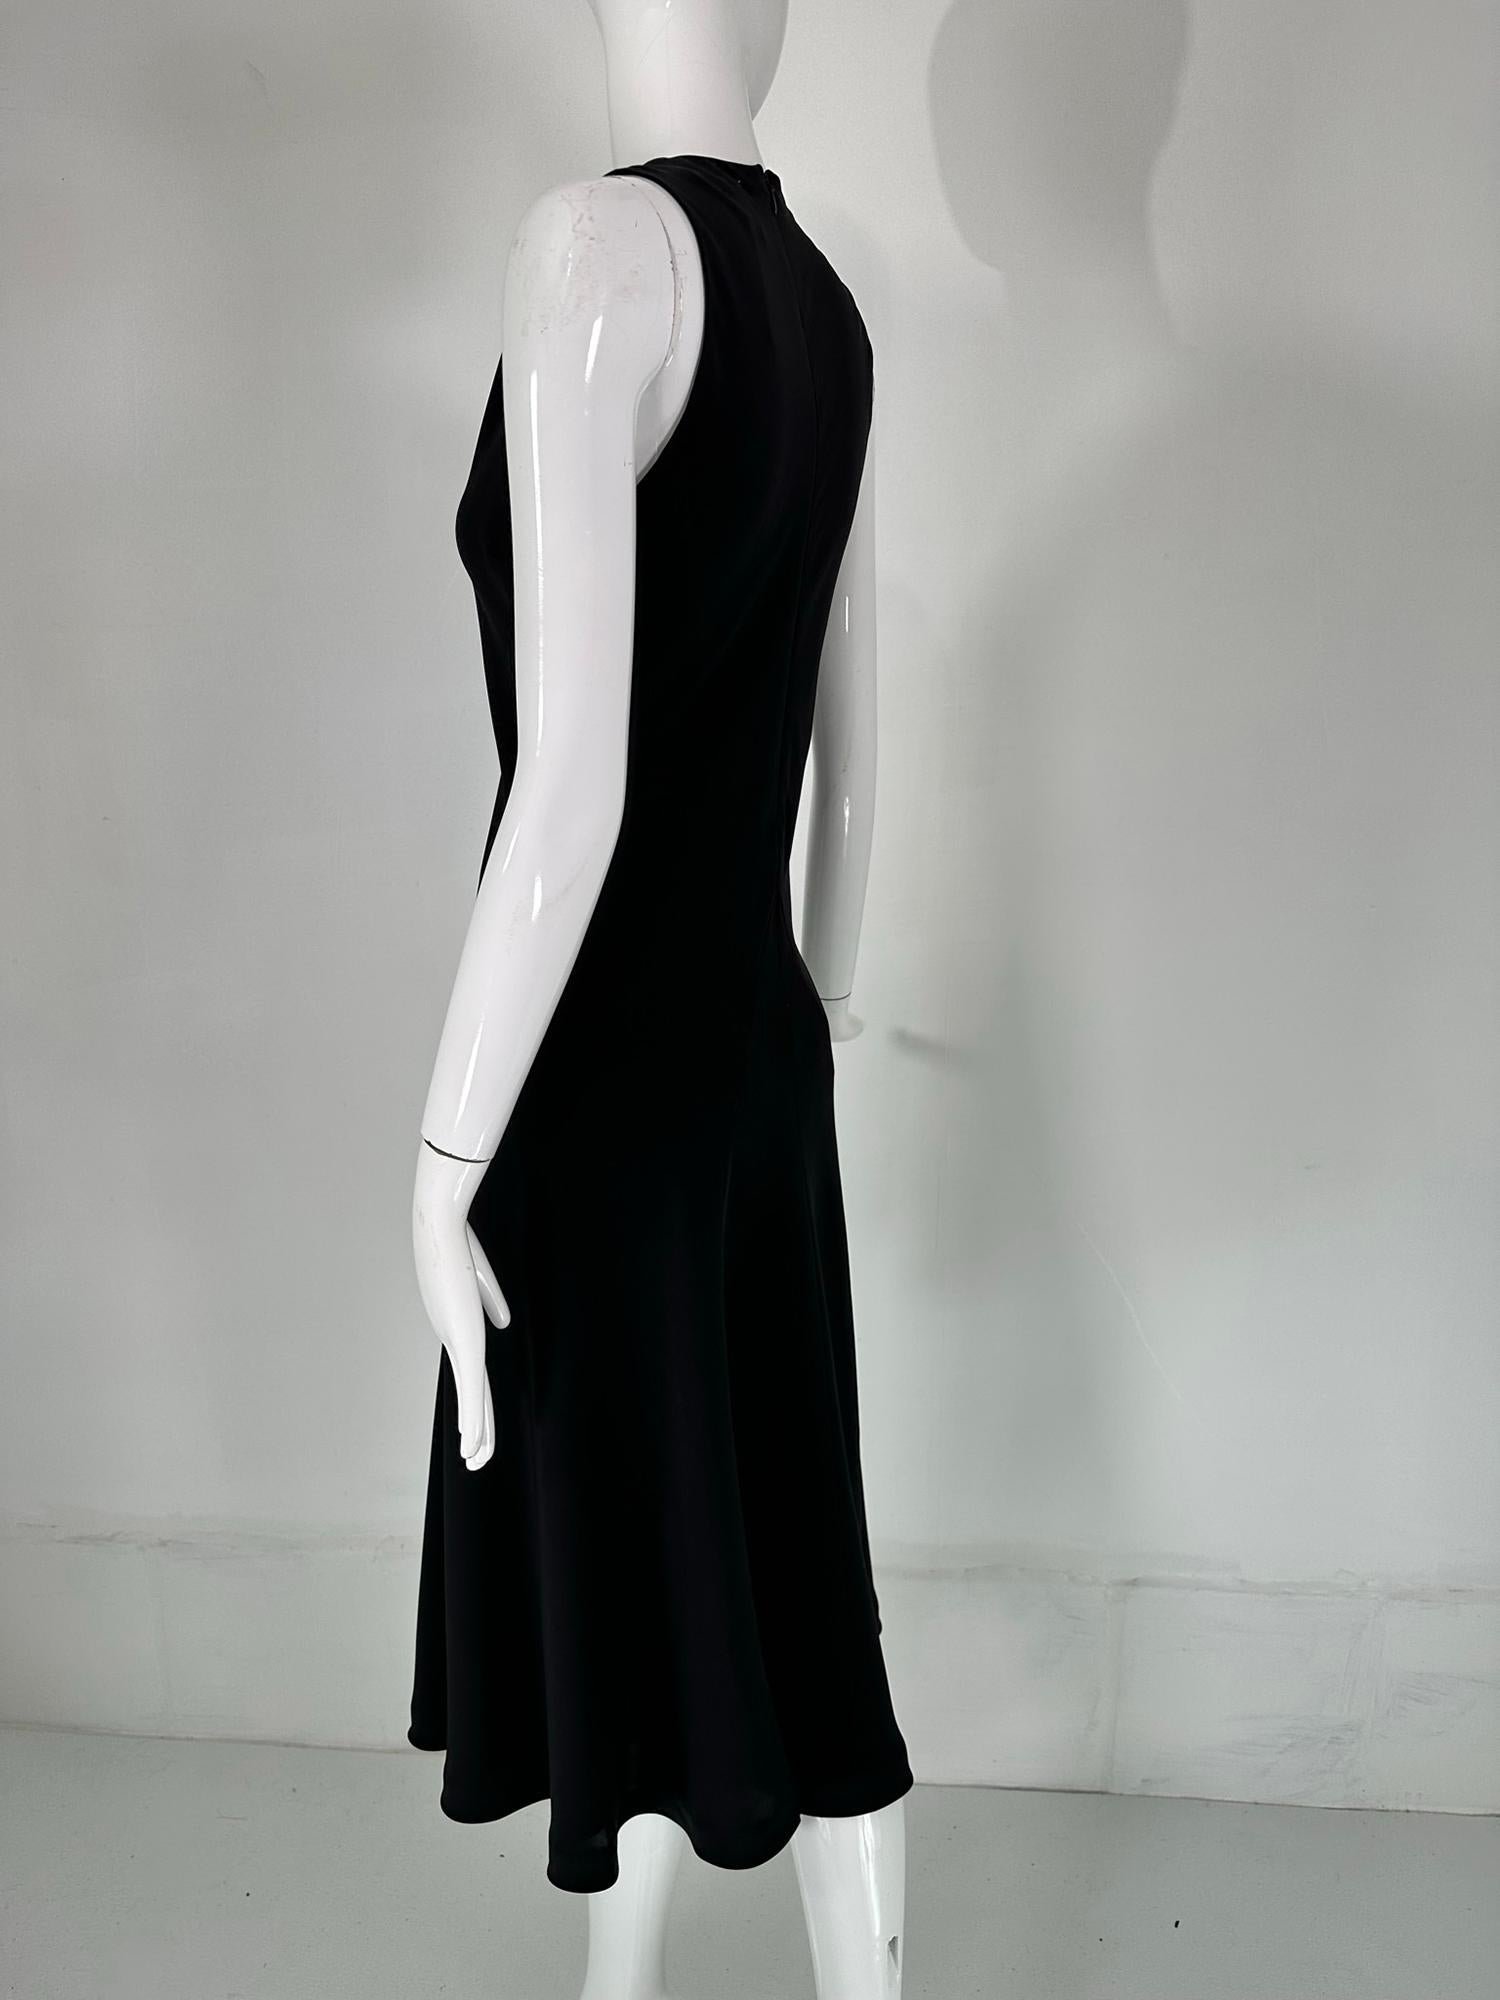 Ralph Lauren Black Label Classic Silk Bias Cut Dress 8 For Sale 5